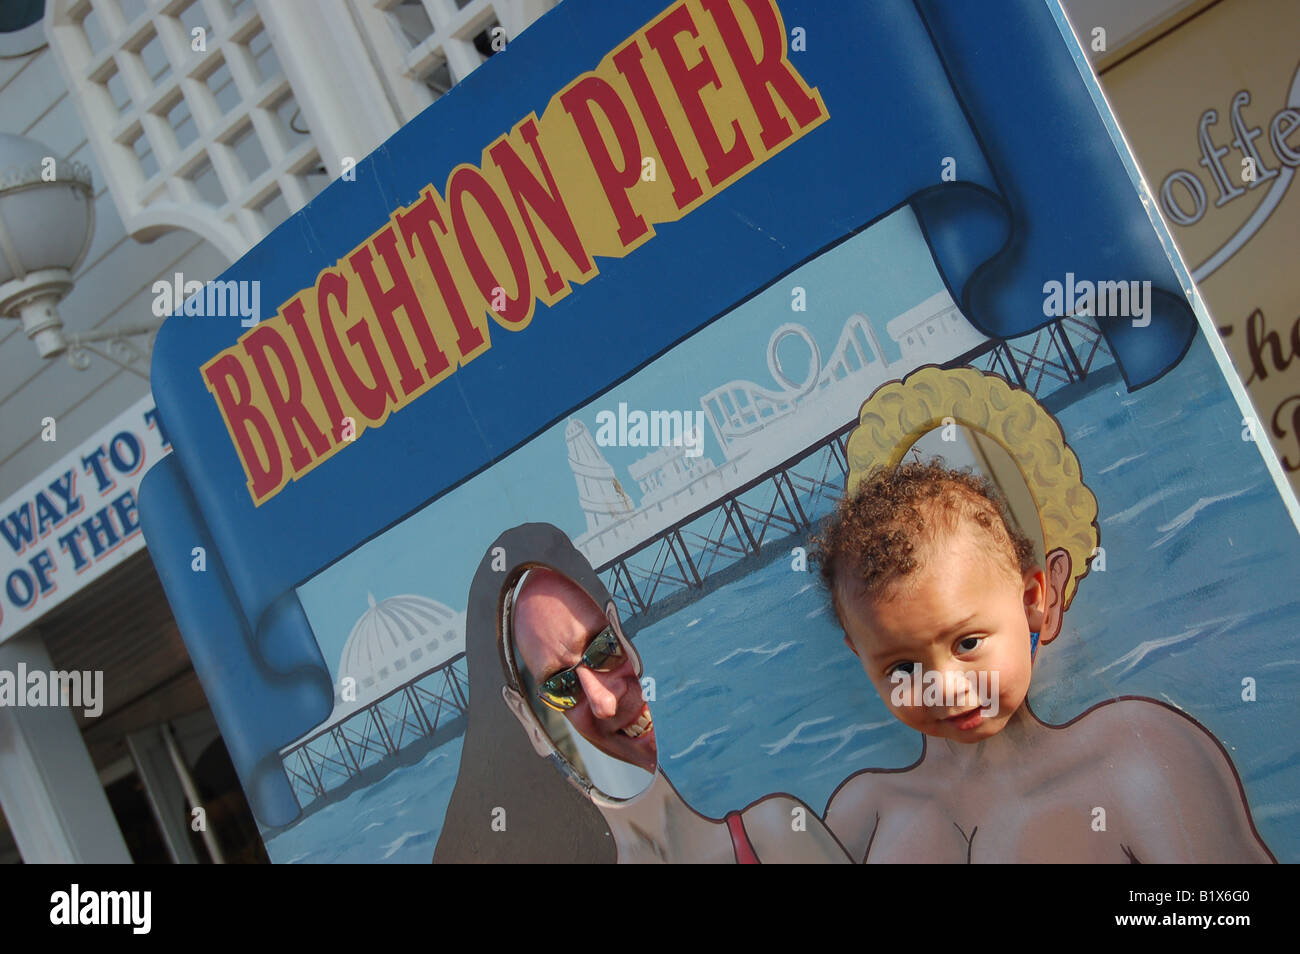 Two people putting their heads through a fairground board, Brighton Pier England Stock Photo